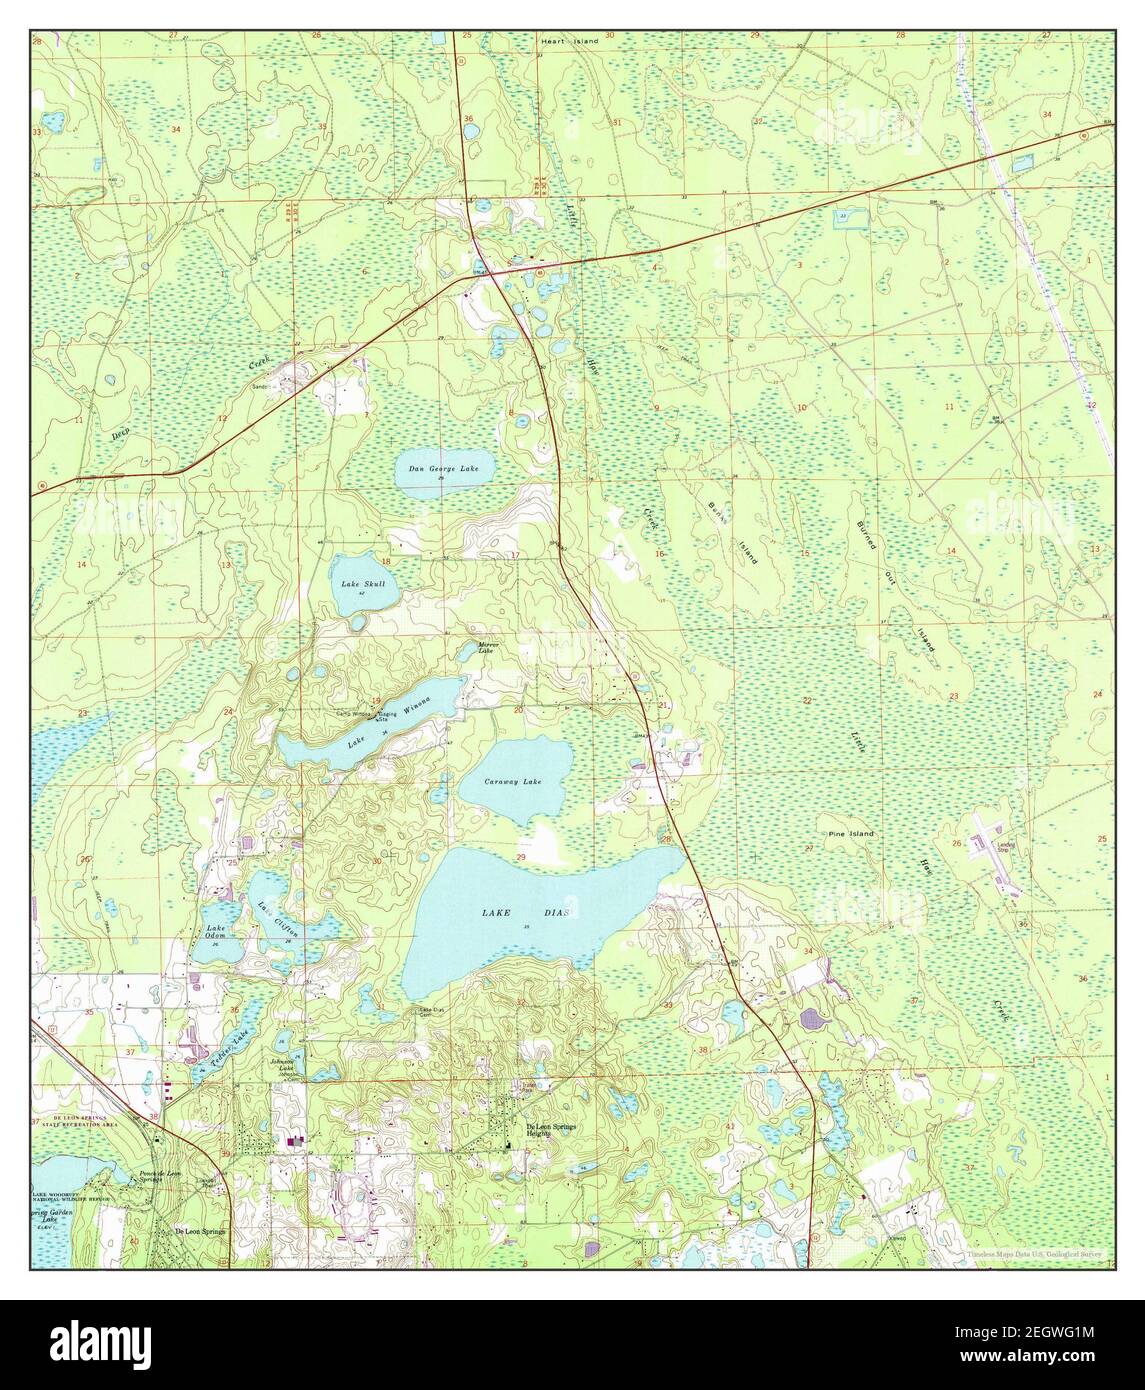 Lake Dias, Florida, map 1971, 1:24000, United States of America by Timeless Maps, data U.S. Geological Survey Stock Photo